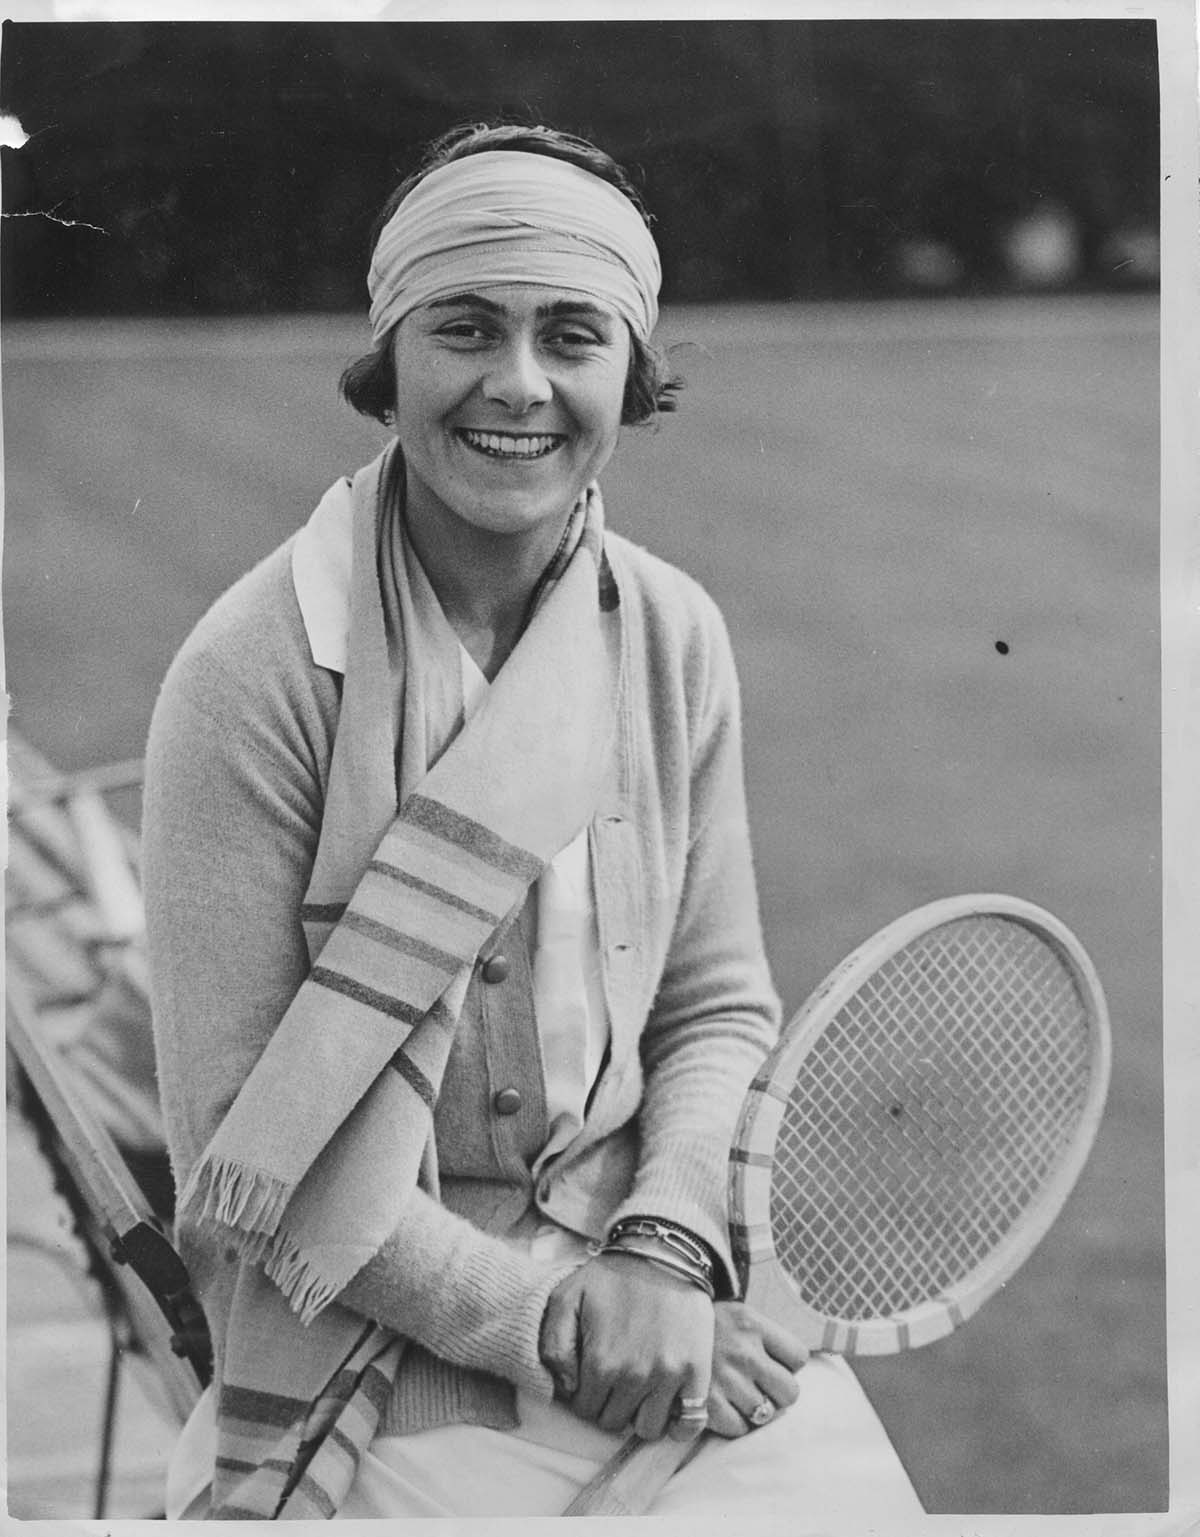 Lilí Álvarez, Wimbledon, Archivo familiar © Cortesía de Jaime López Chicheri Dabán